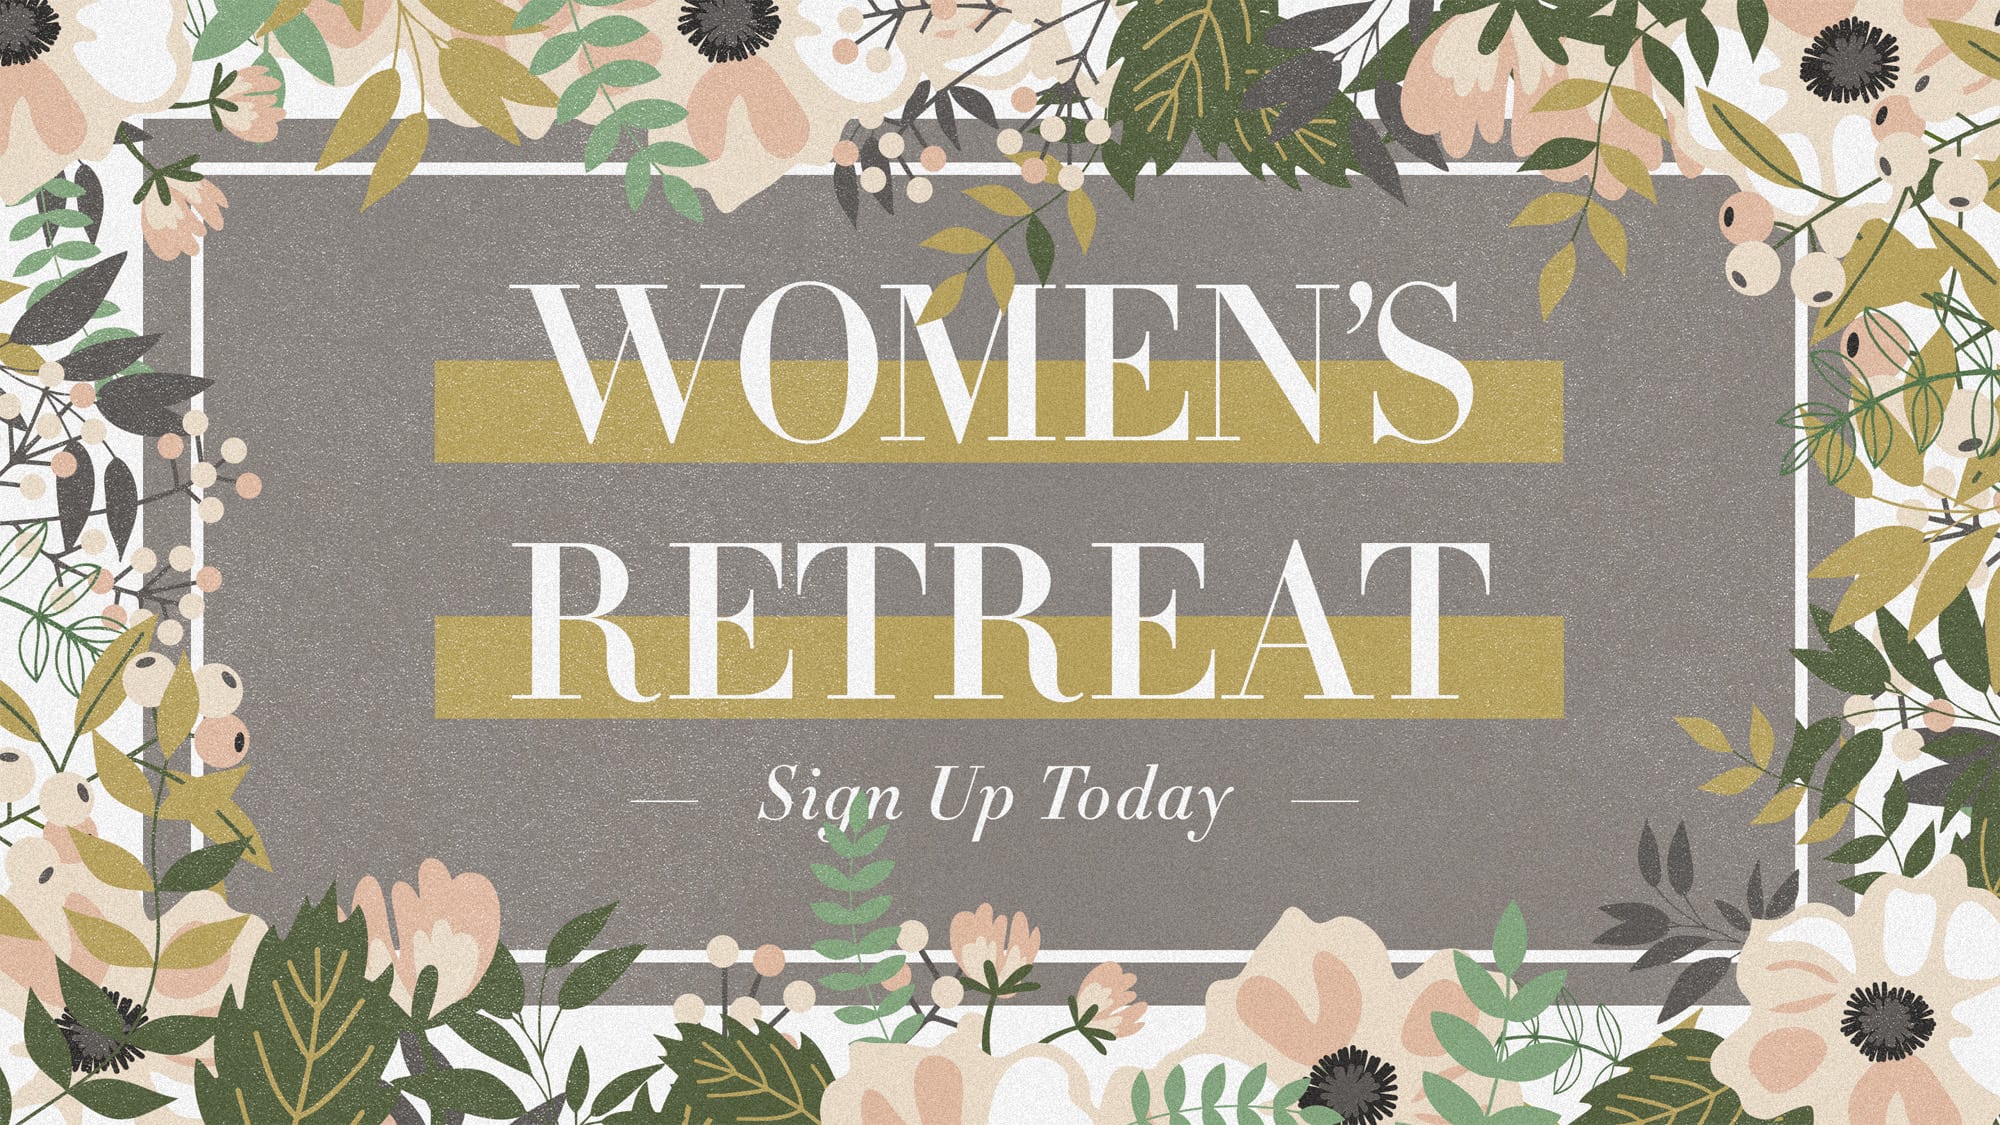 Annual Women's Retreat Five Forks Baptist Church